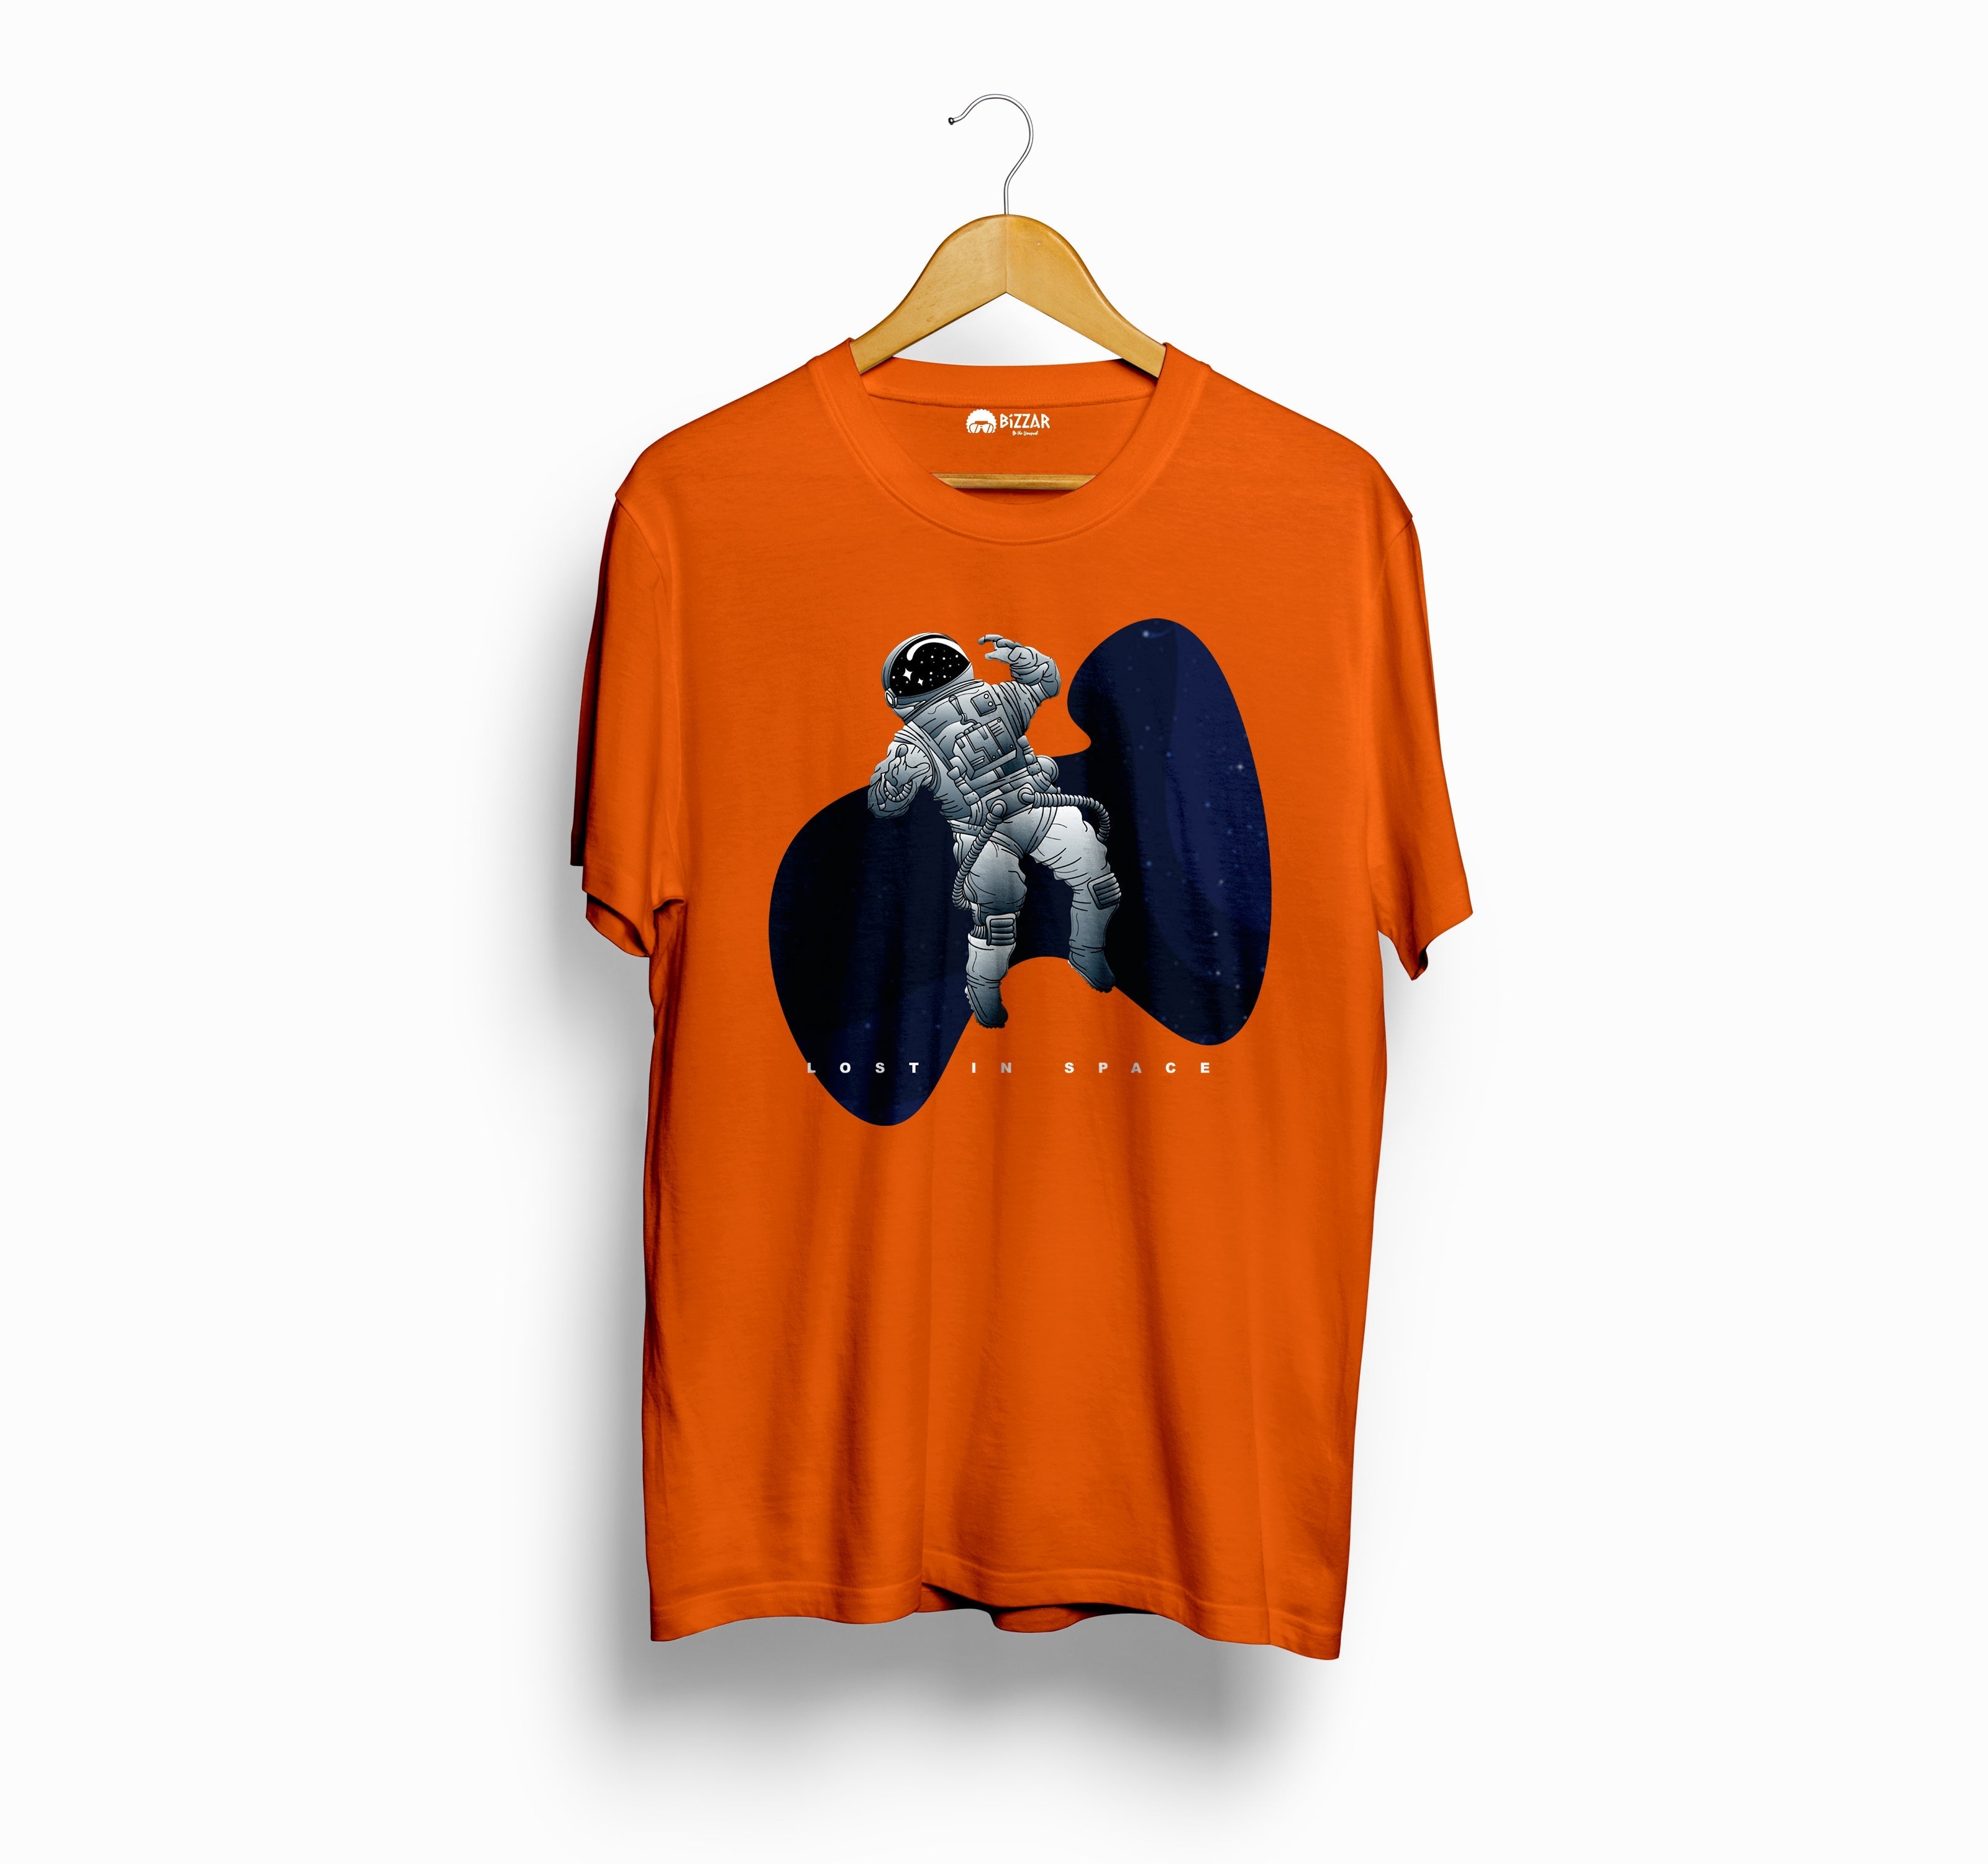 Bizzar's Lost in Space Orange T-Shirt